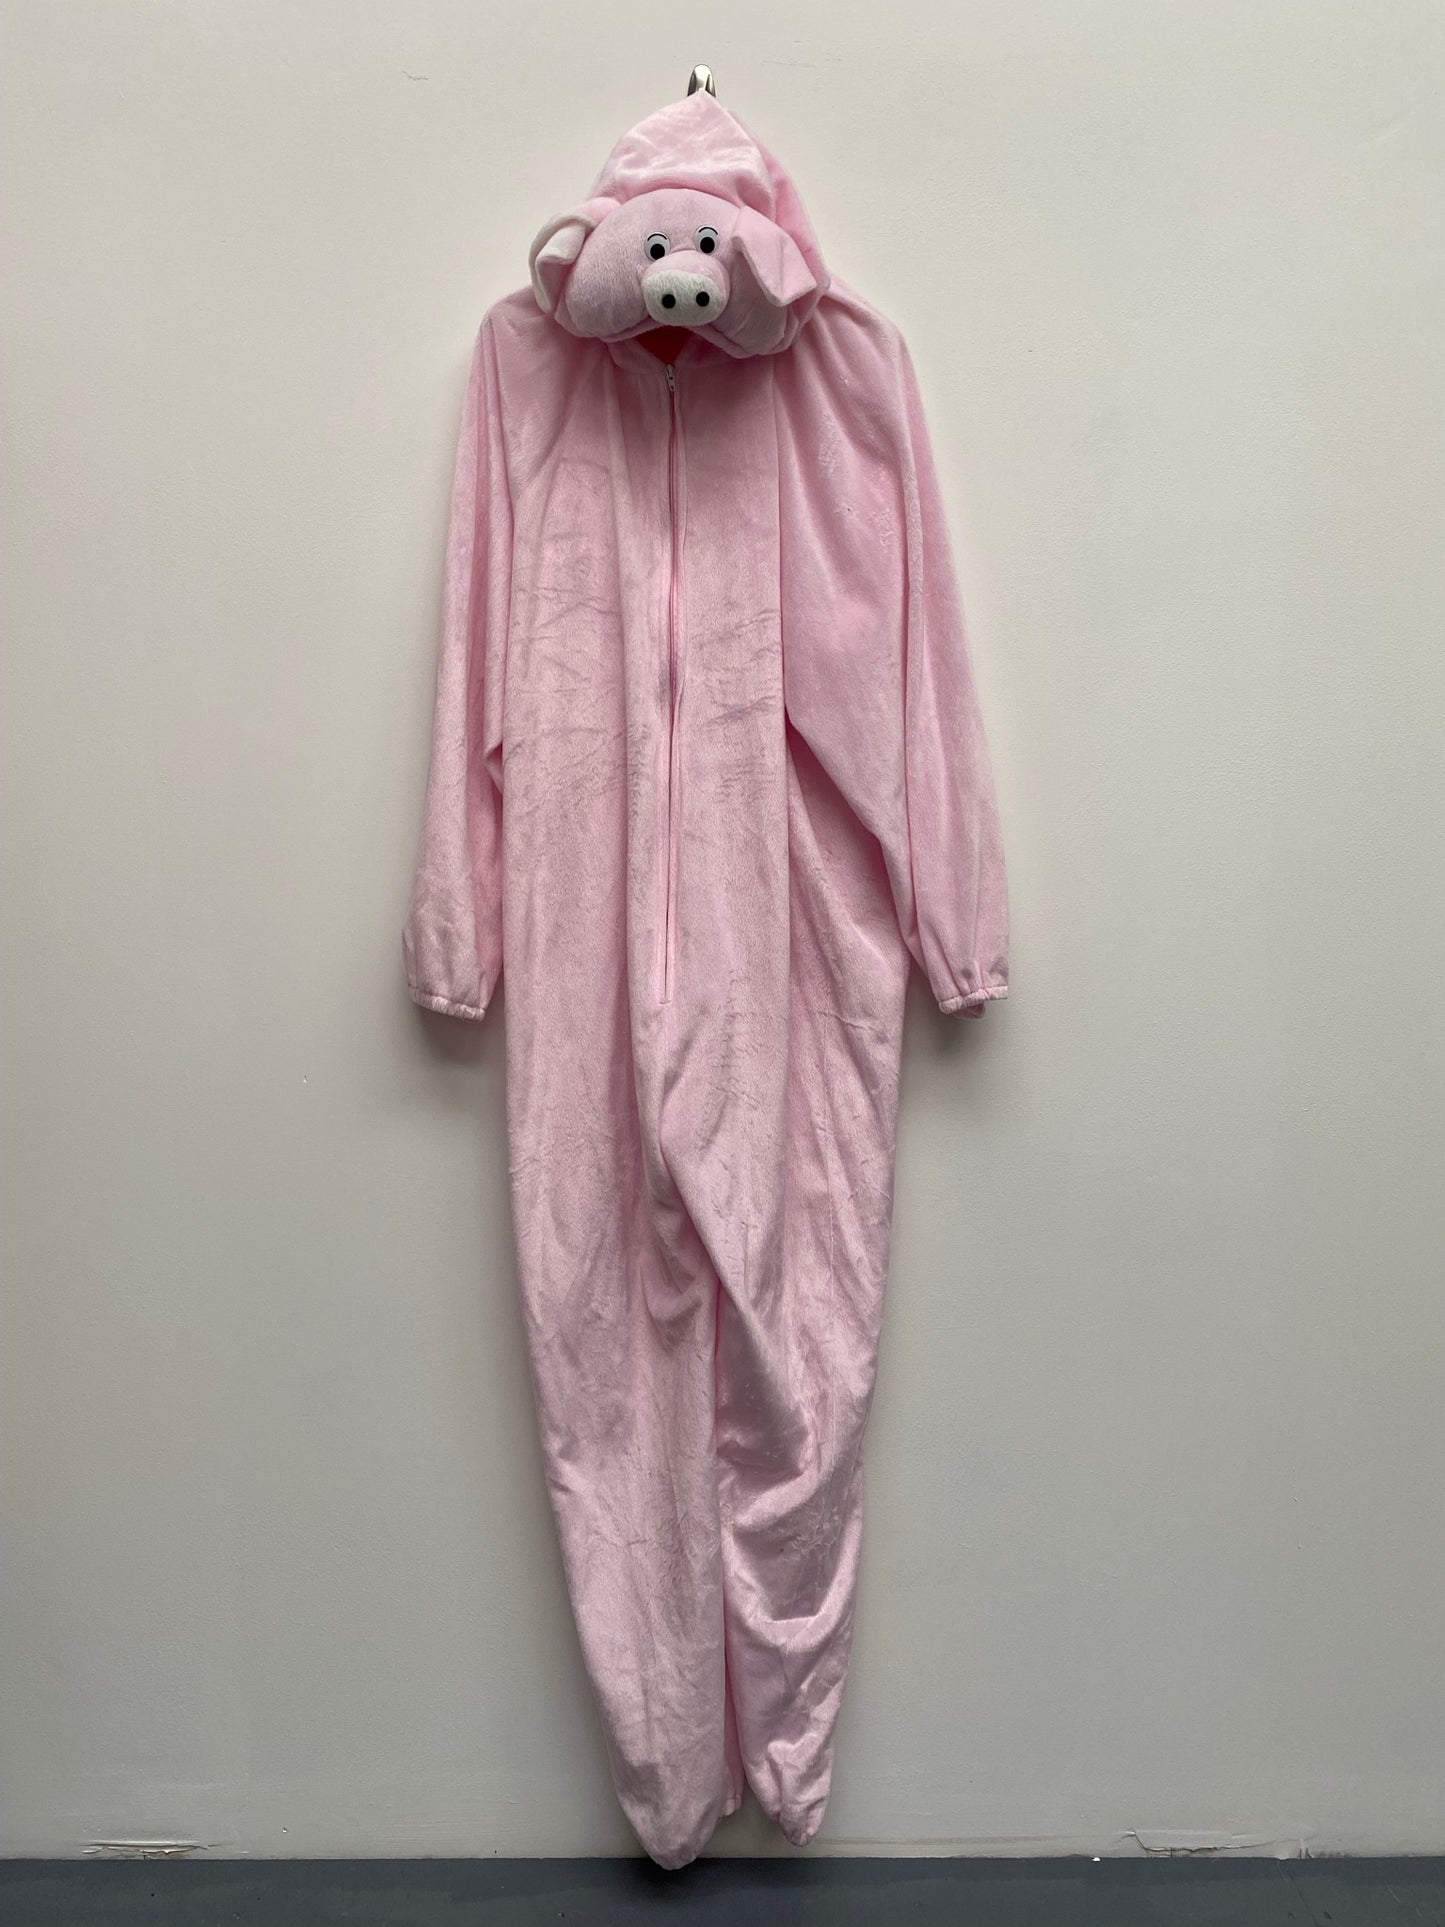 Adults Pink Pig Bodysuit 2XL - Ex Hire Fancy Dress Mascot Costume